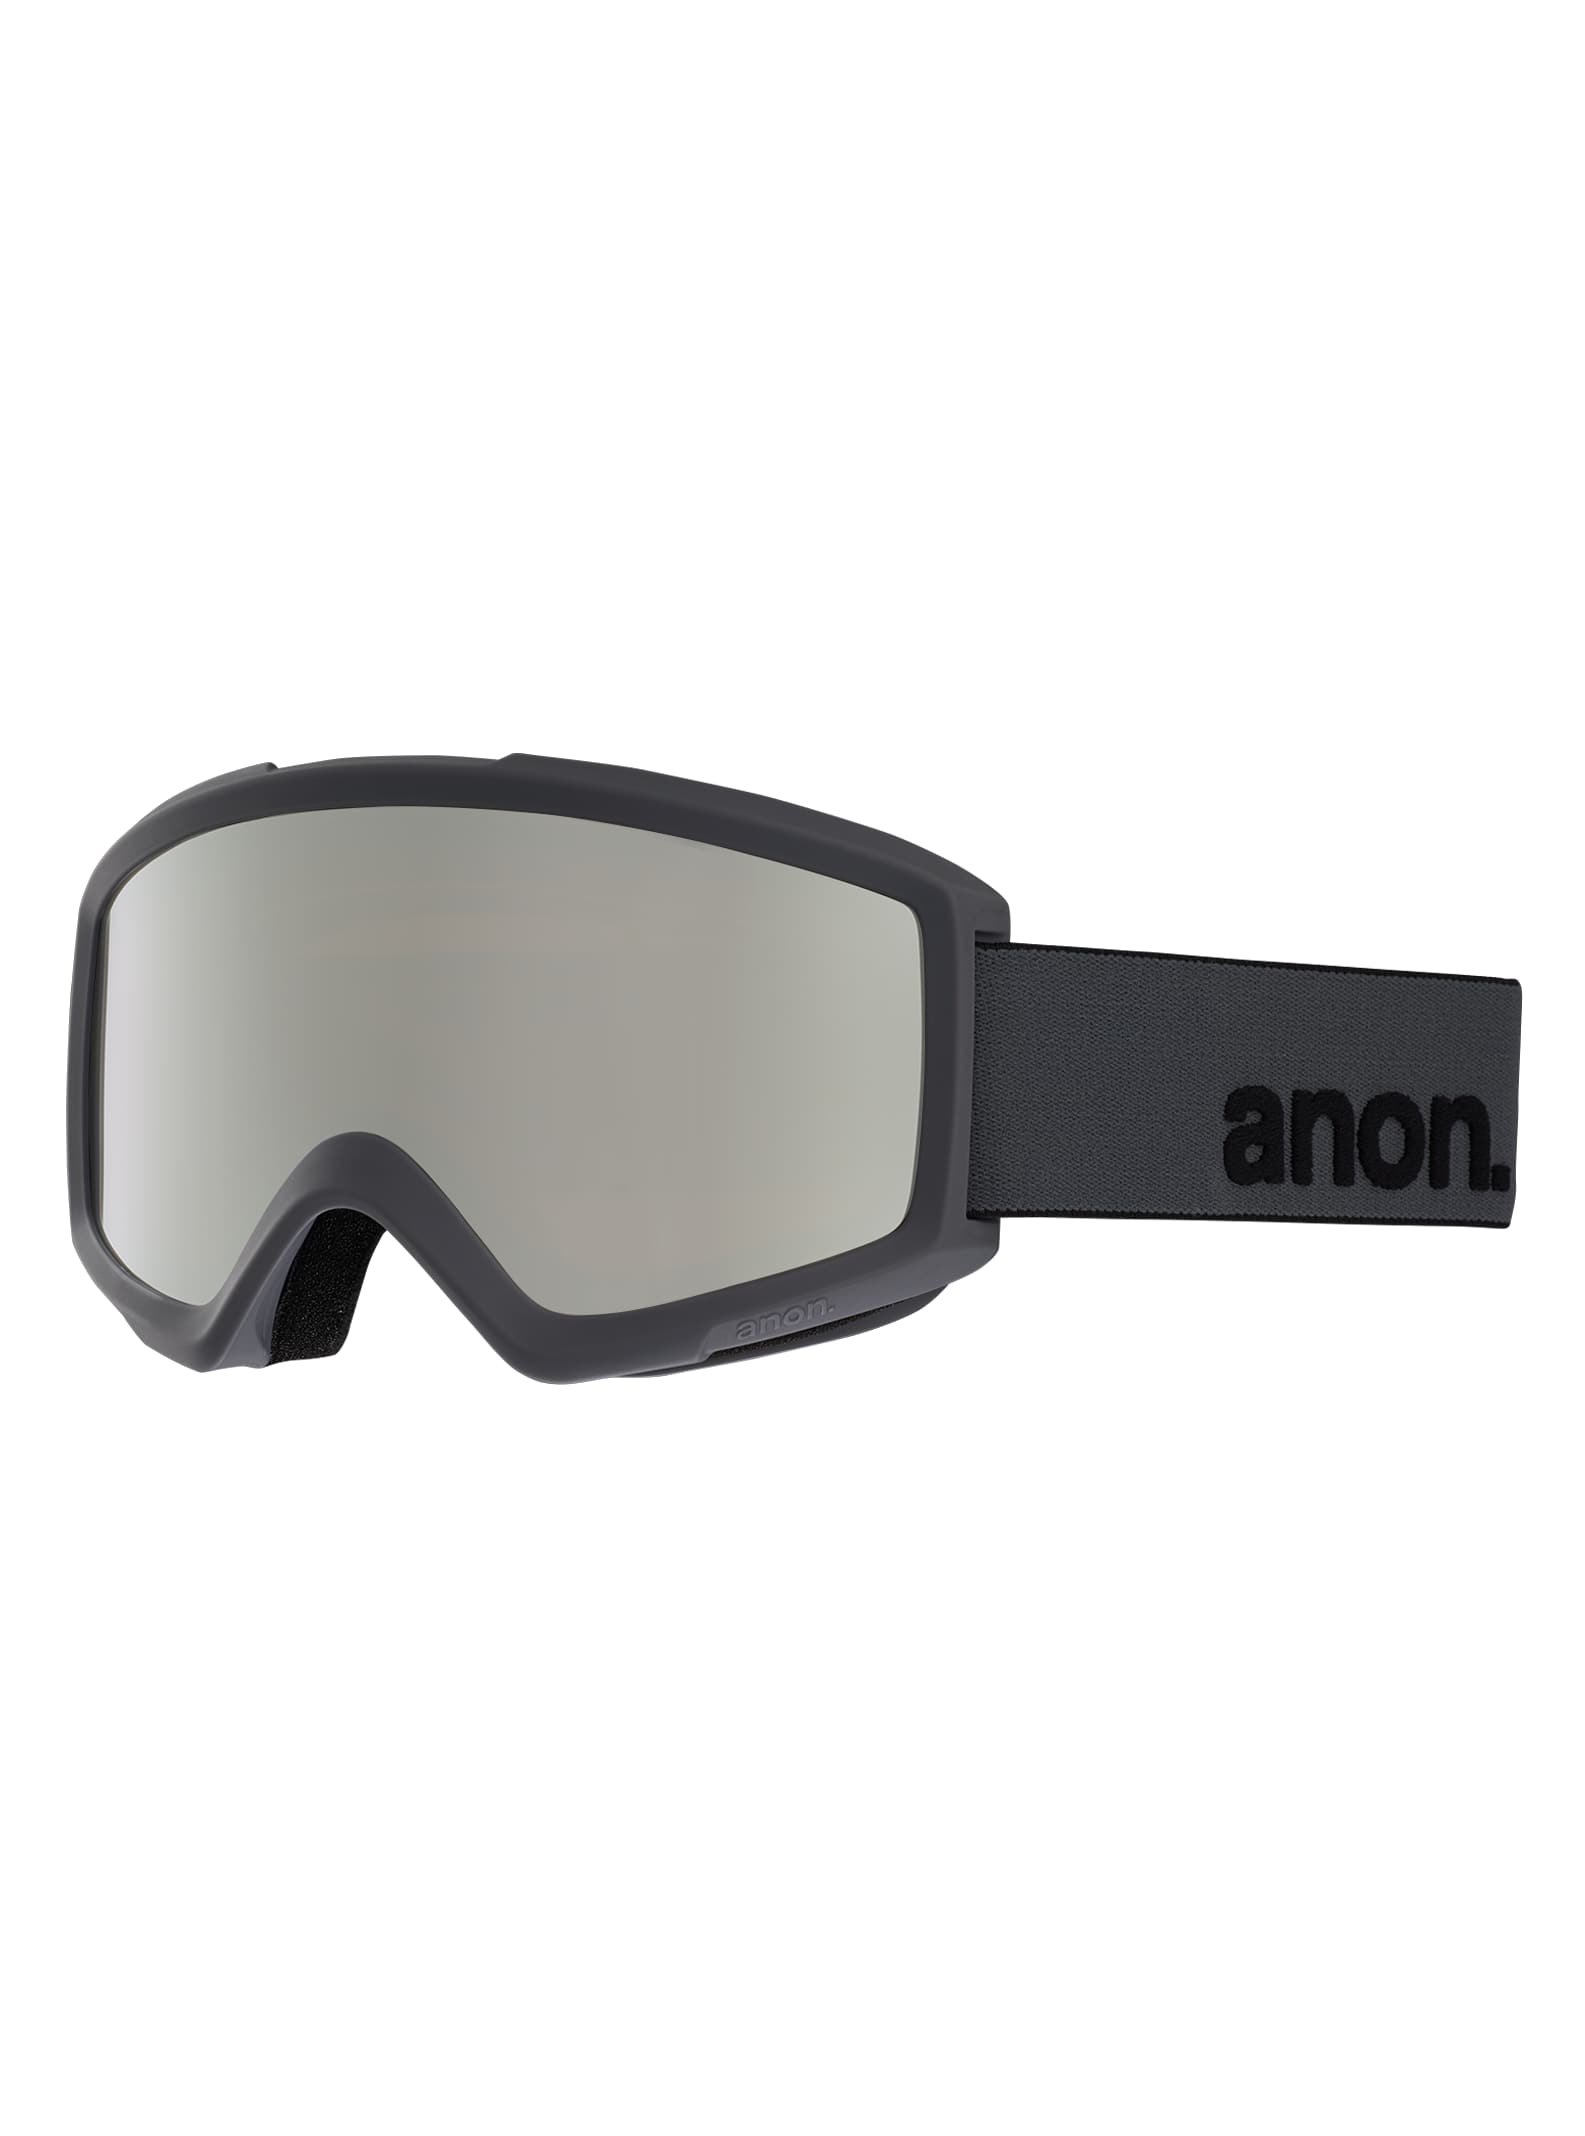 Men's Anon Helix 2.0 Sonar Goggle + Spare Lens | Burton.com Winter 2019 US